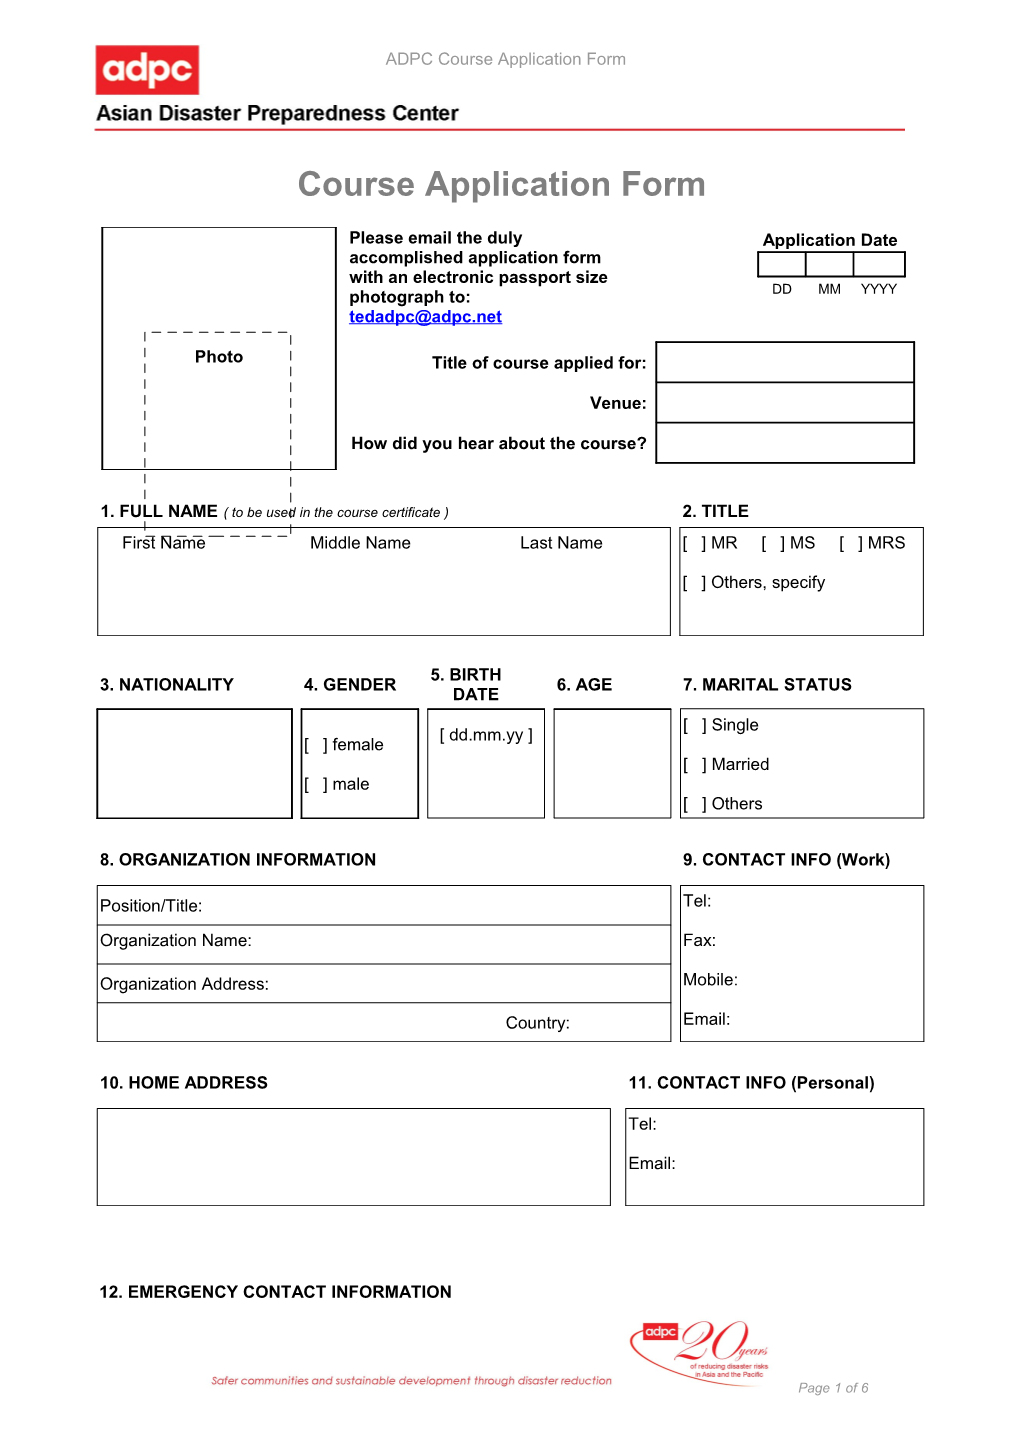 ADPC Course Application Form